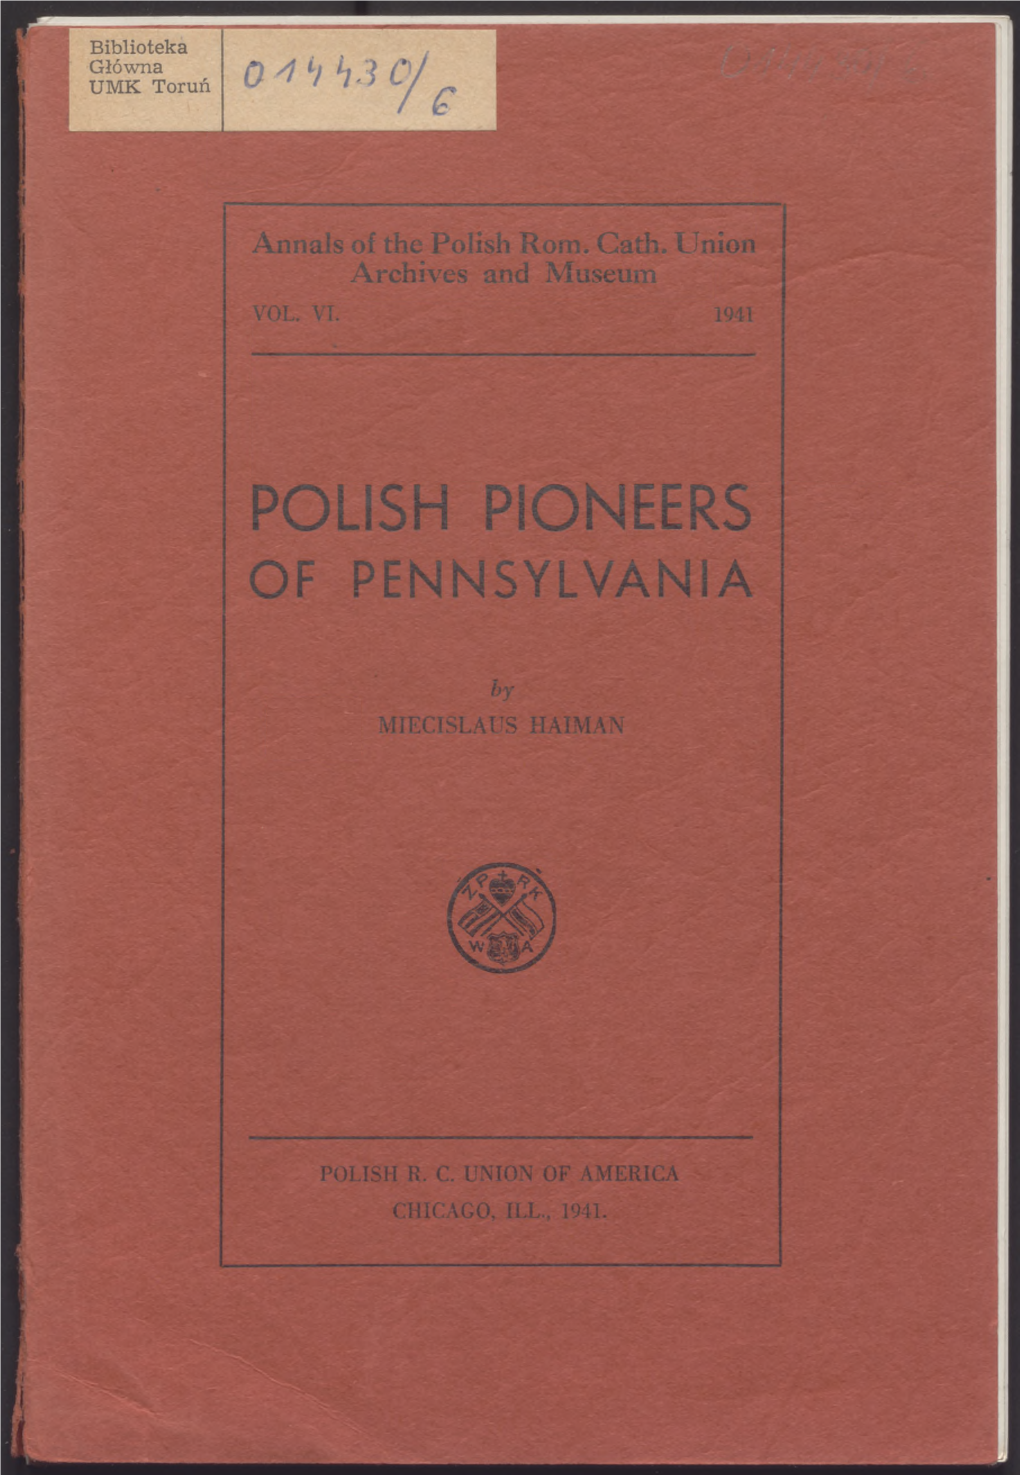 Polish Pioneers of Pennsylvania